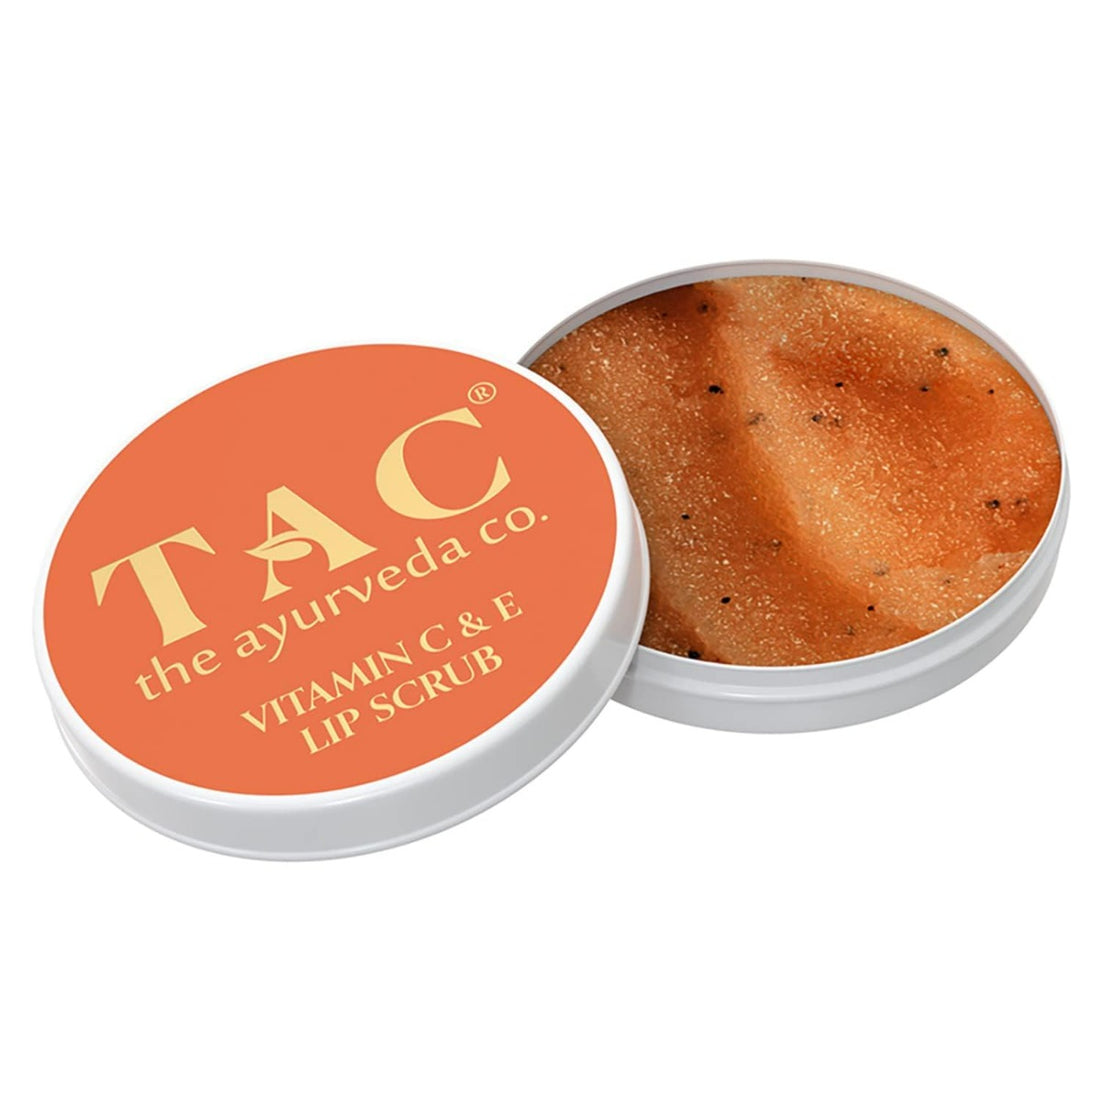 TAC - The Ayurveda Co. Vitamin C and E Lip Scrub for Dark Lips to Lighten (20gm)